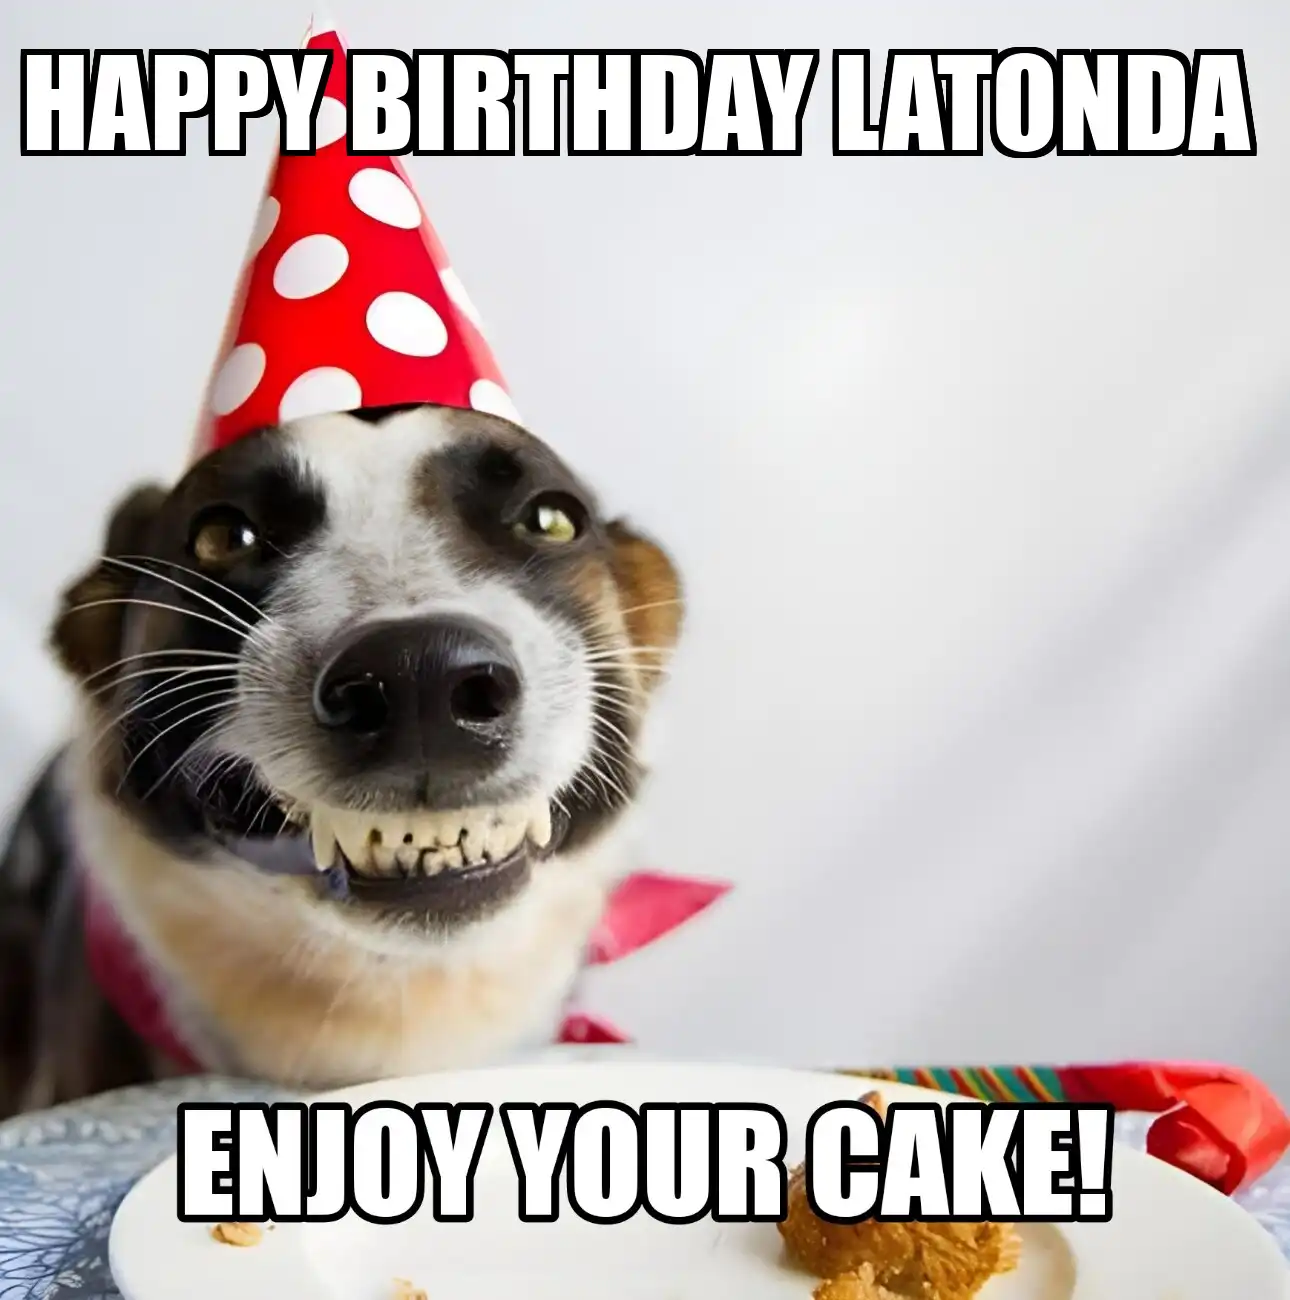 Happy Birthday Latonda Enjoy Your Cake Dog Meme